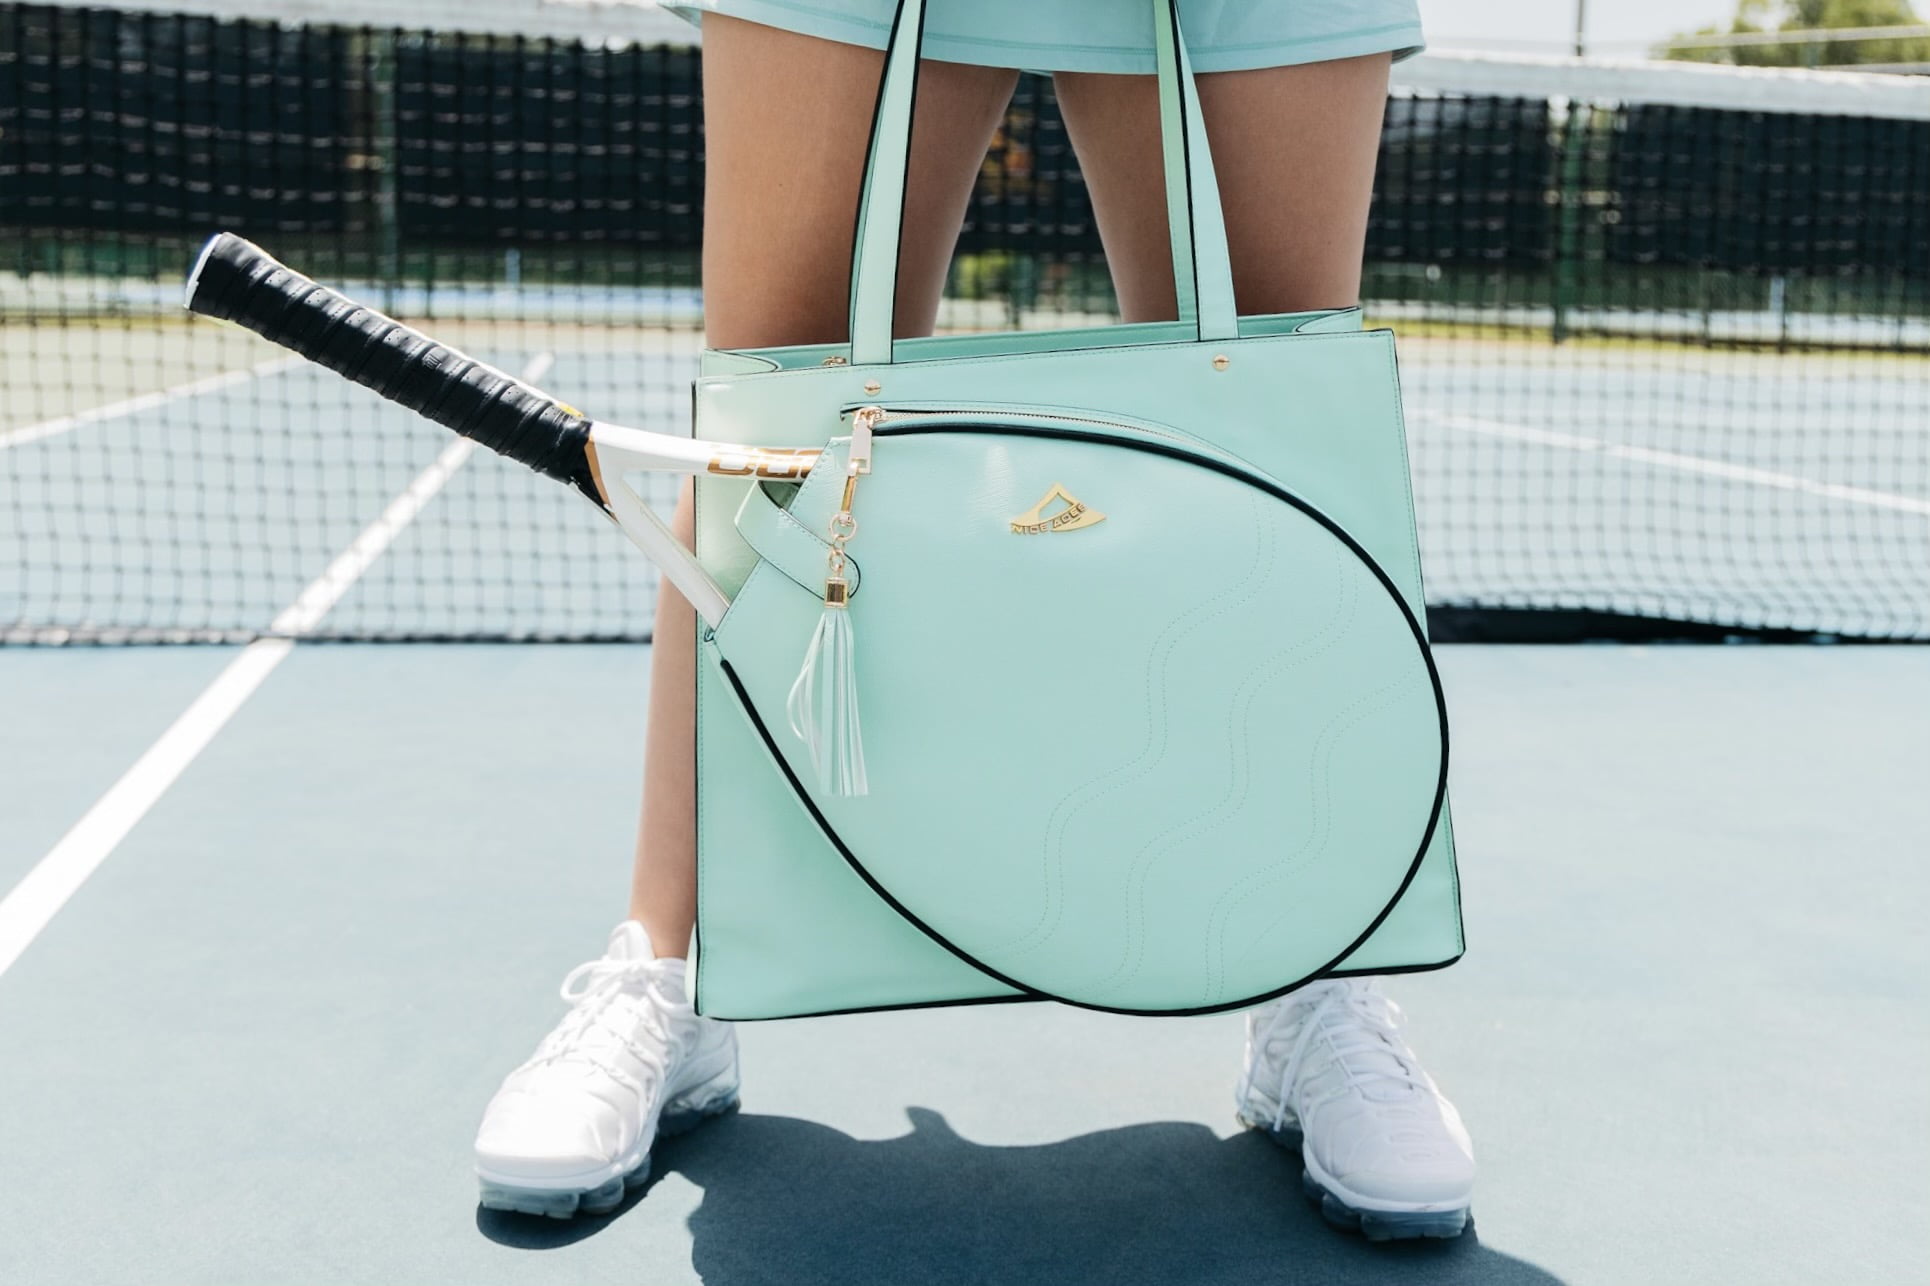 NiceAces Designer Women's Tennis Tote Bag - Maya Collection - Mint Green